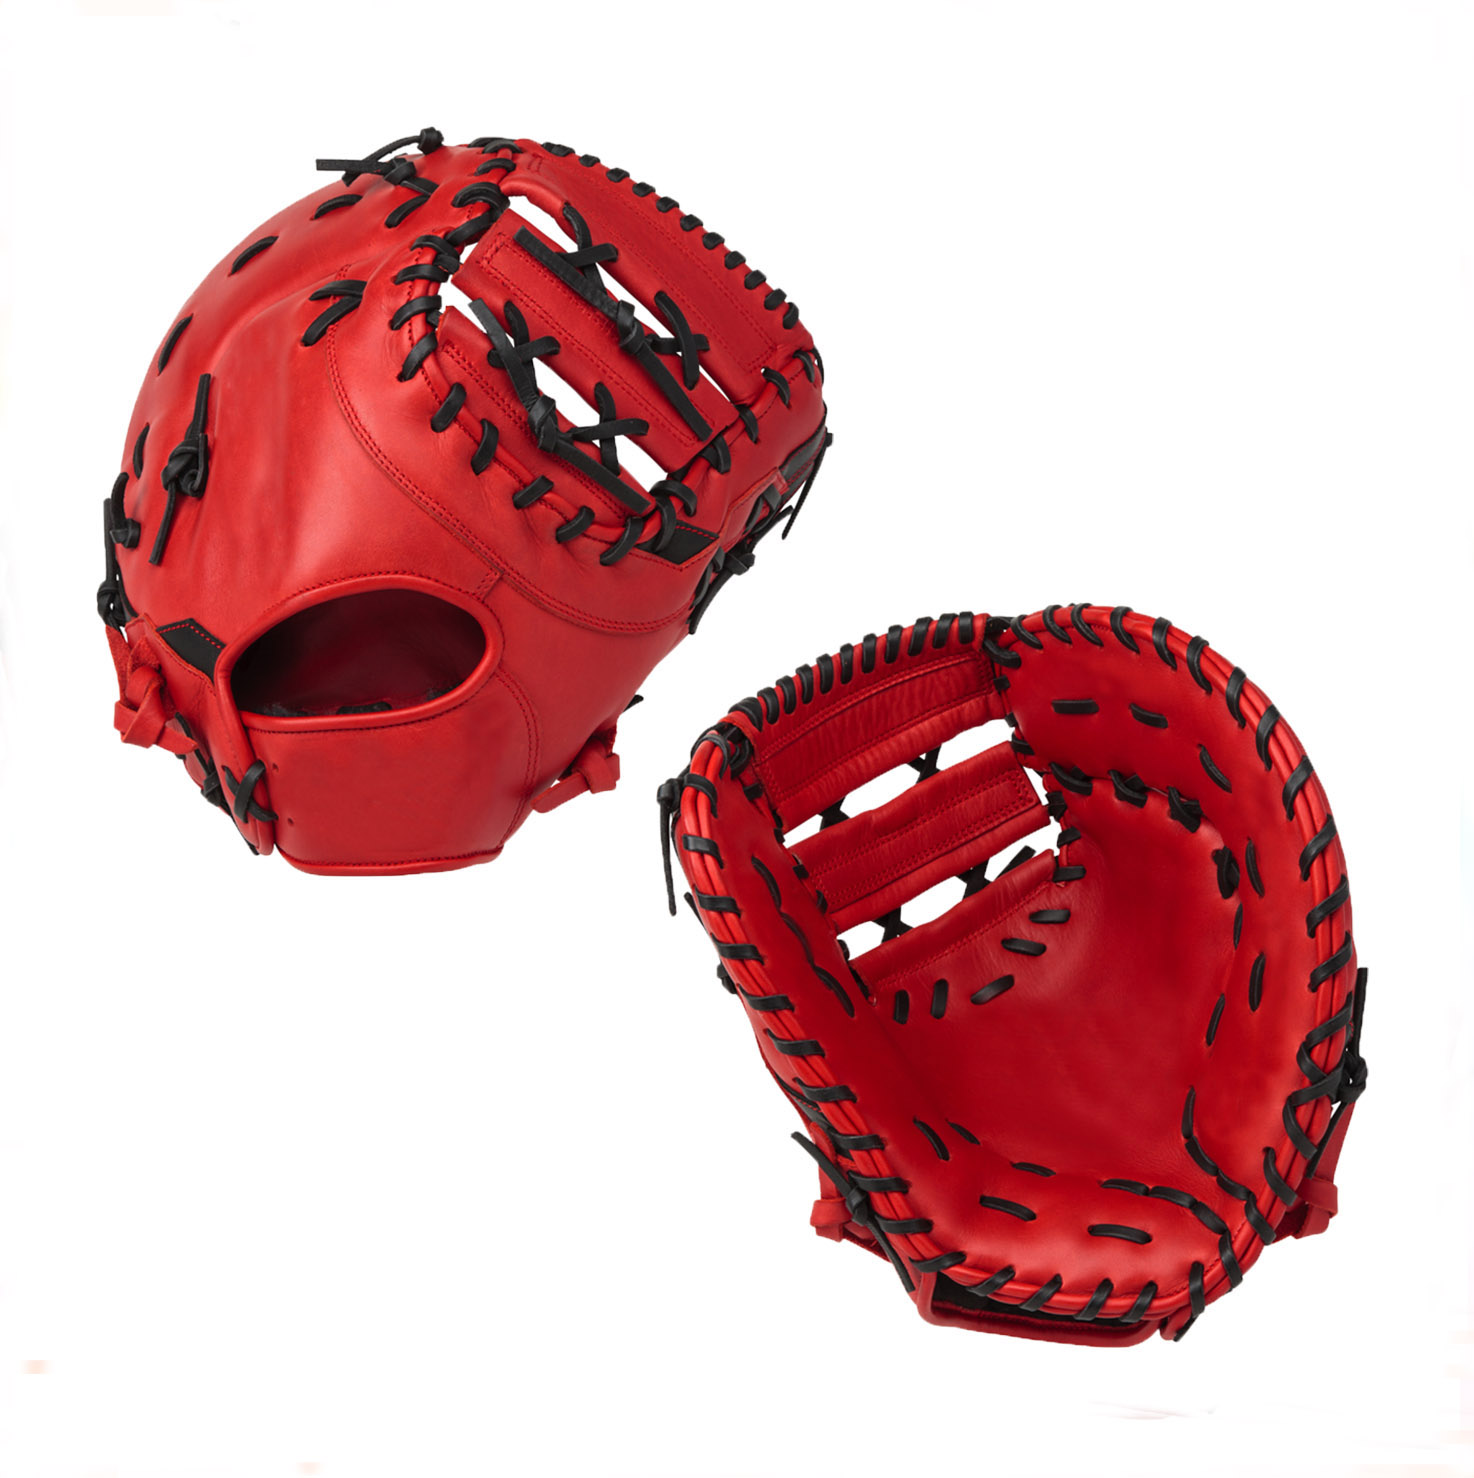 Leather Baseball gloves 12.5 durable First Base mitt